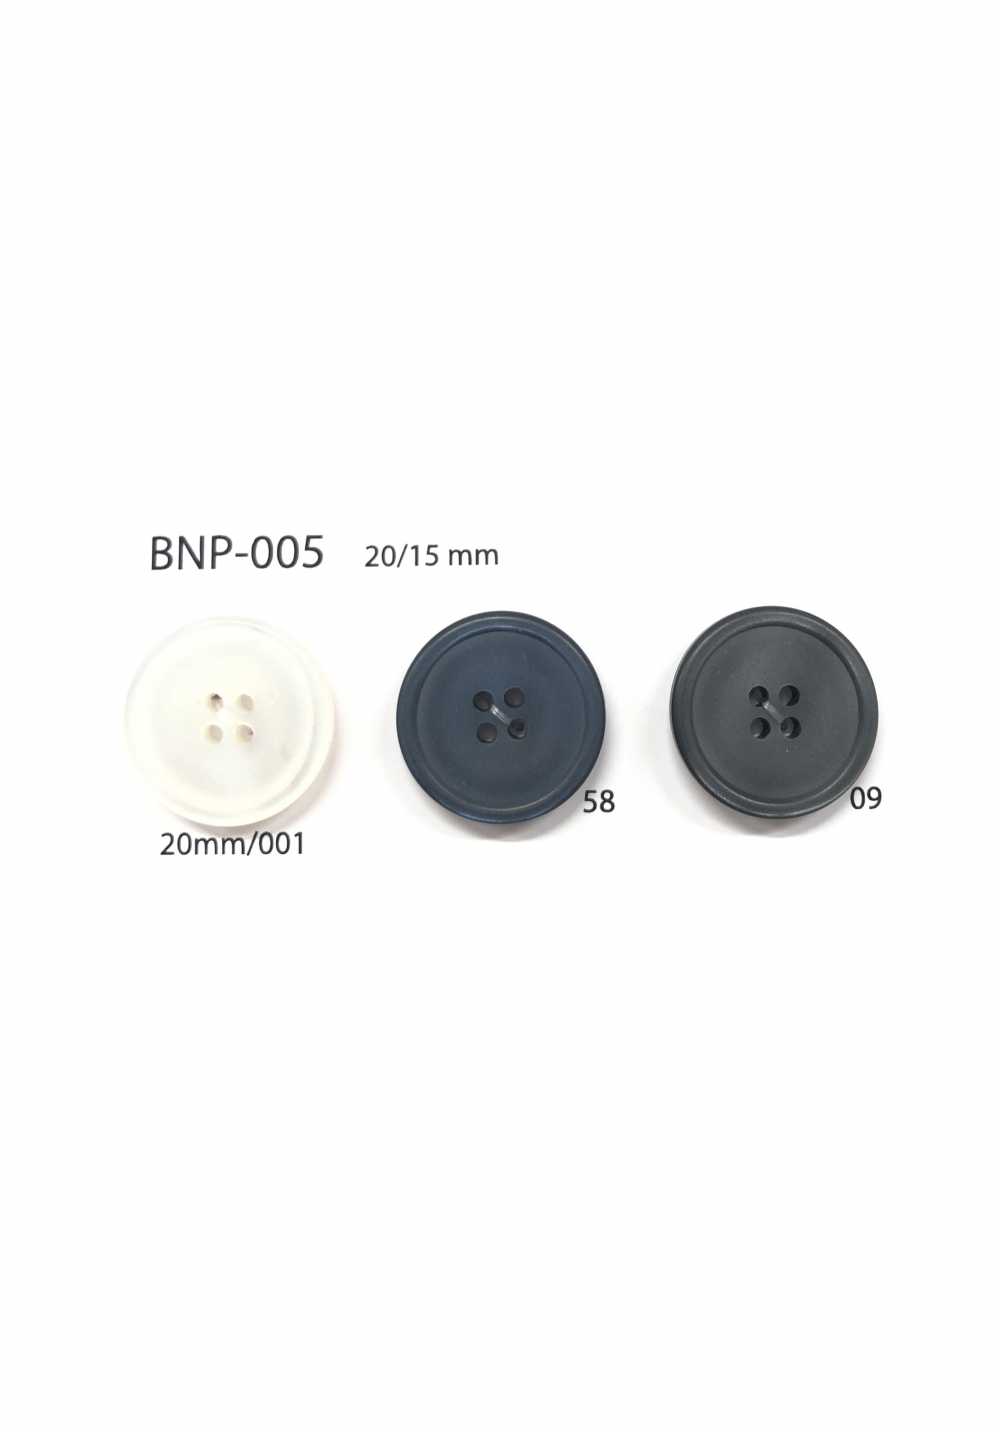 BNP-005 Biopolyester 4-hole Button IRIS